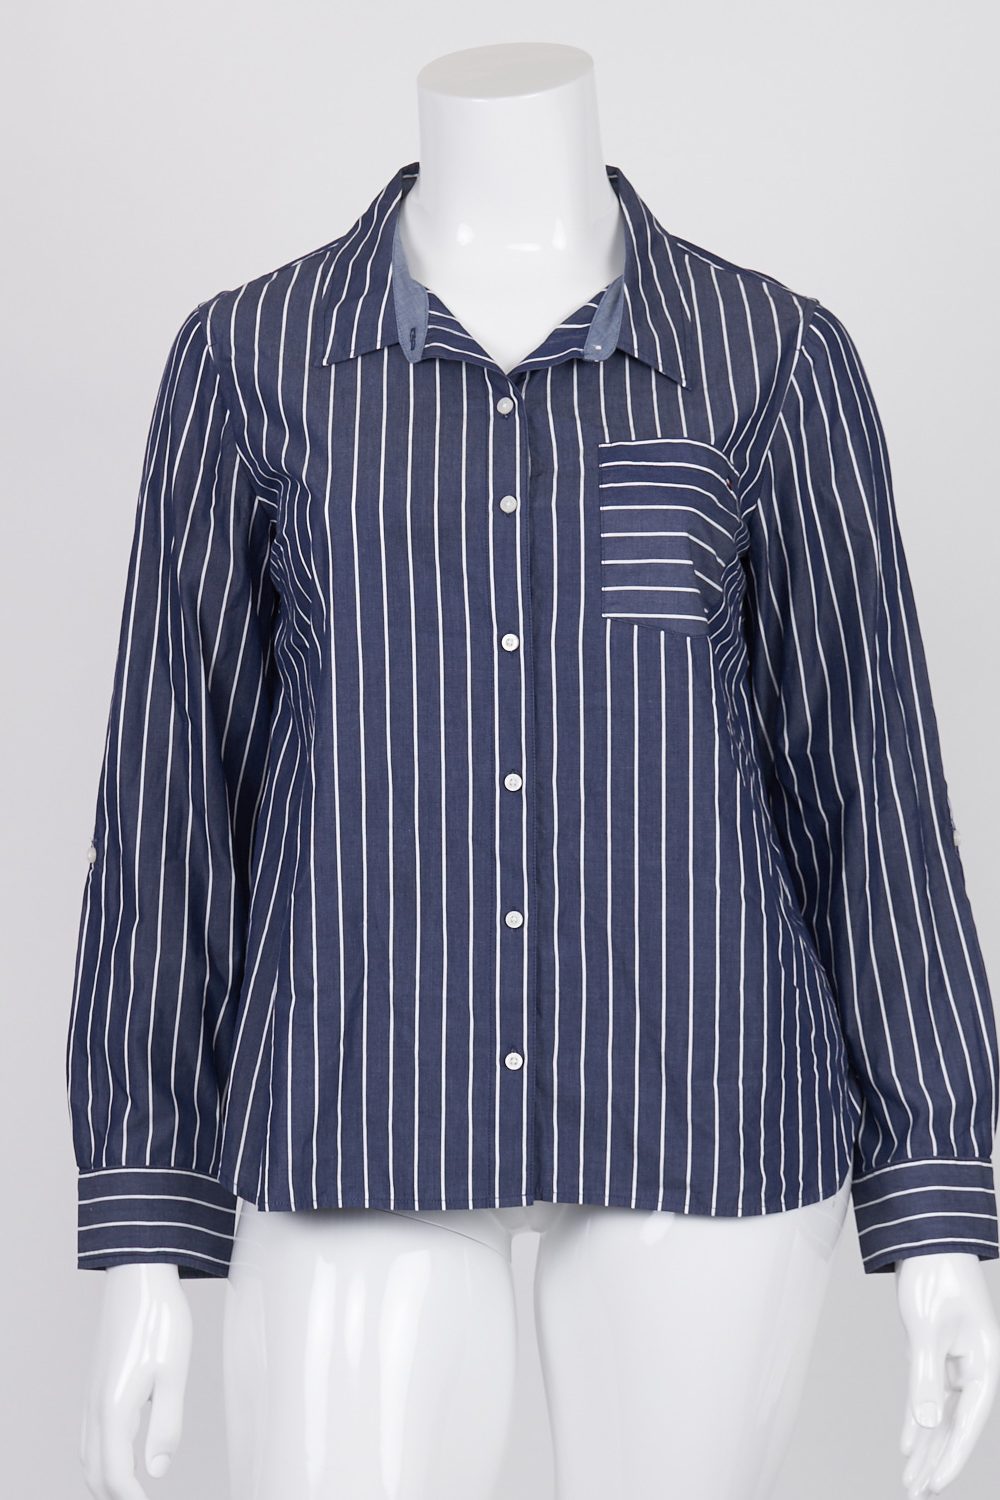 Tommy Hilfiger Navy Striped Shirt XL